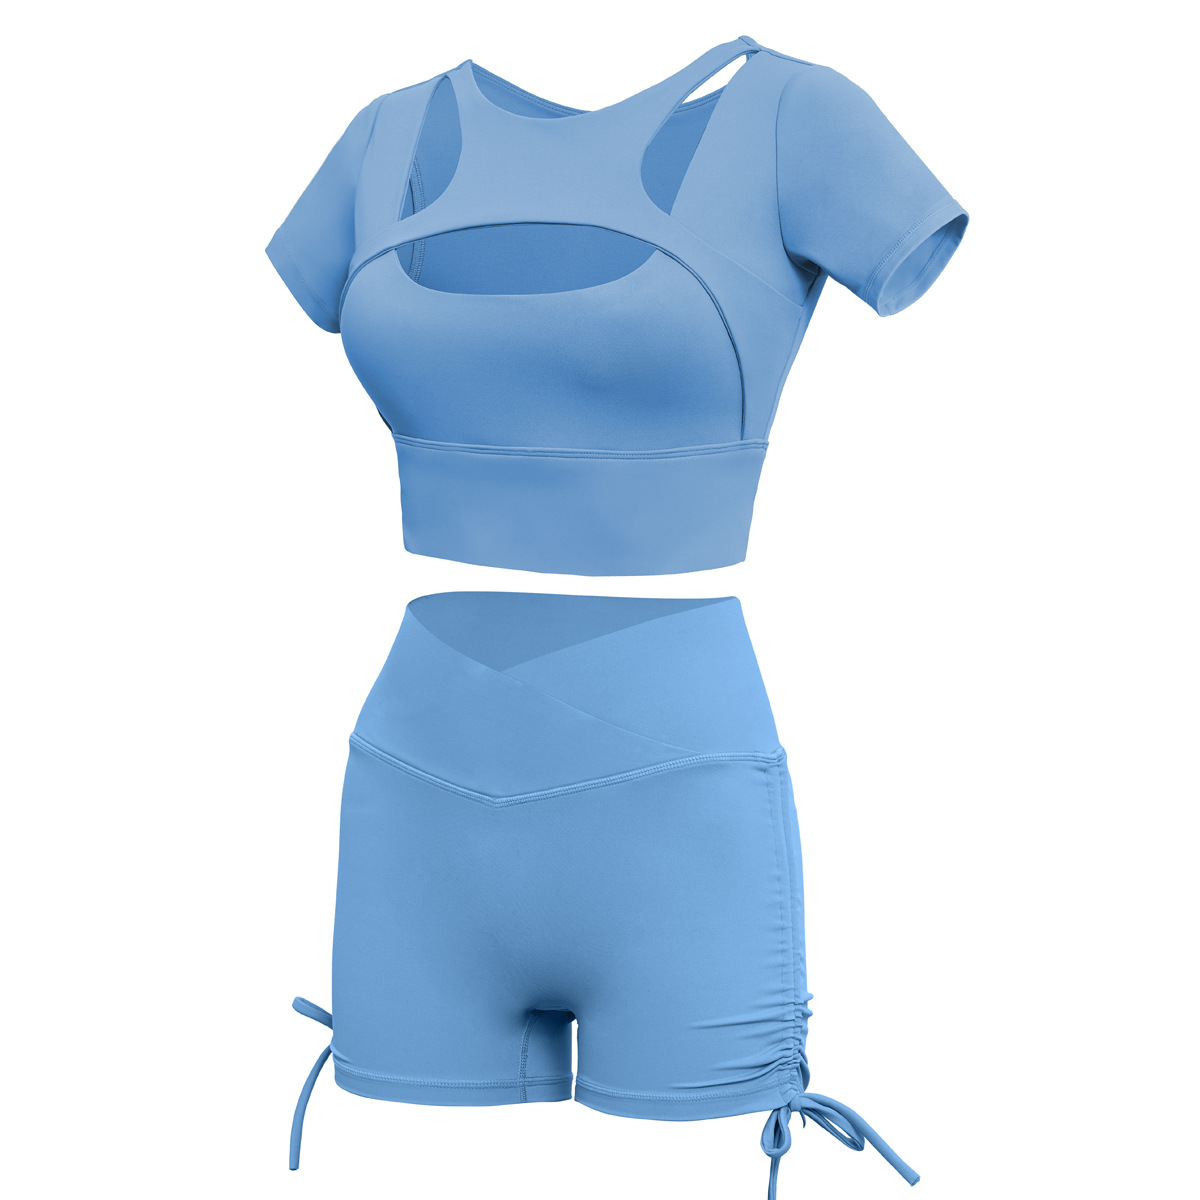 Leisure yoga Suit 2 Piece Sports Shirts Crop Top Shorts Sport Set Fitness Tracksuit Workout Set